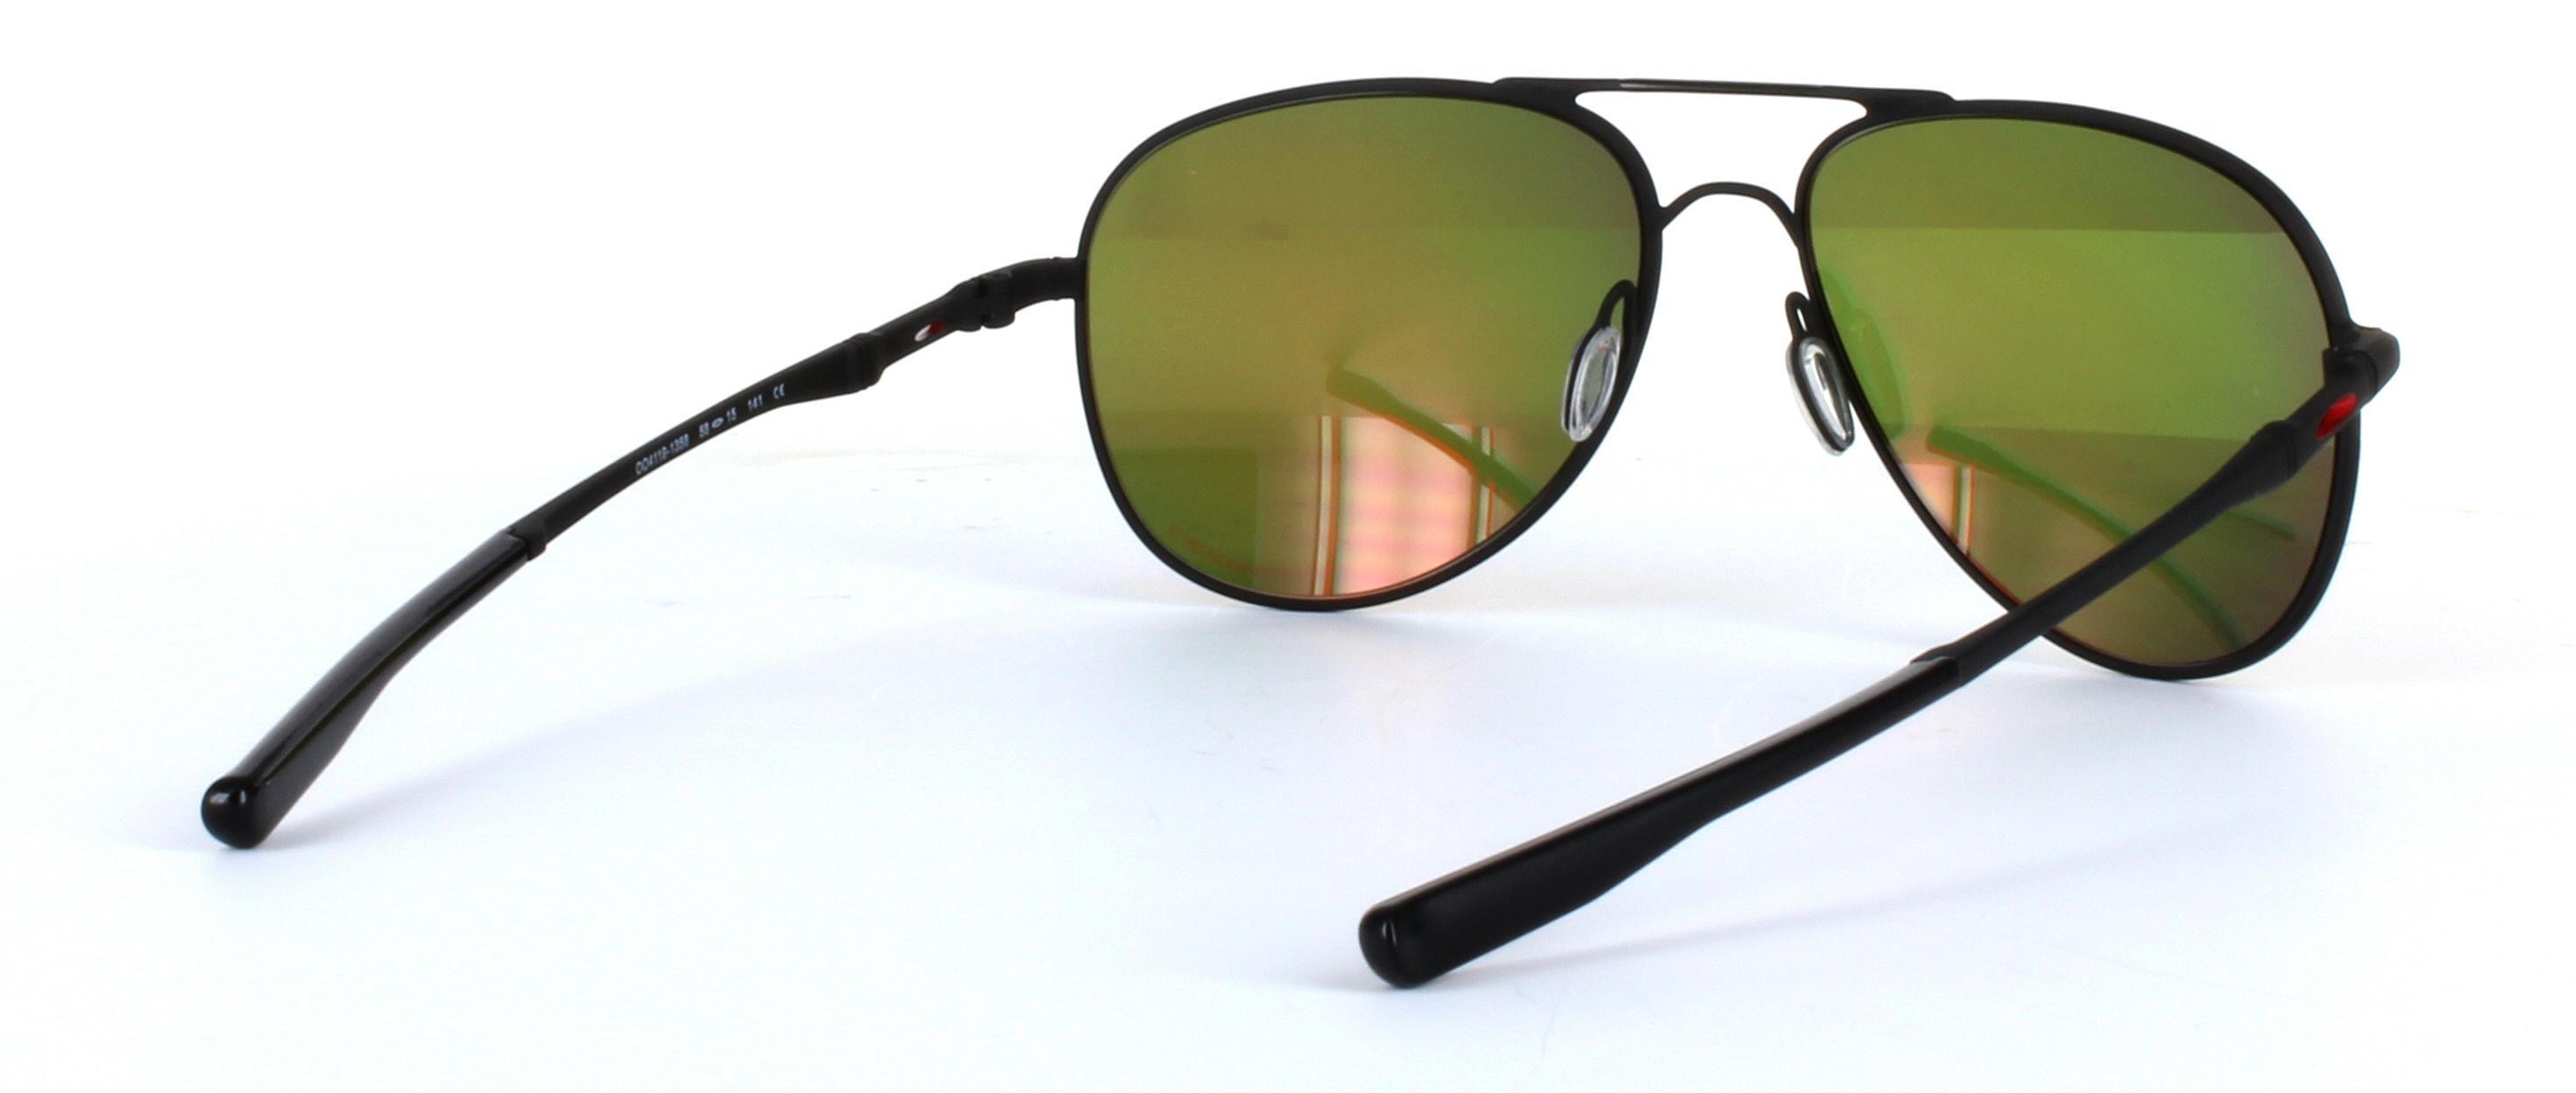 Oakley Elmont Black Full Rim Aviator Metal Sunglasses - Image View 4